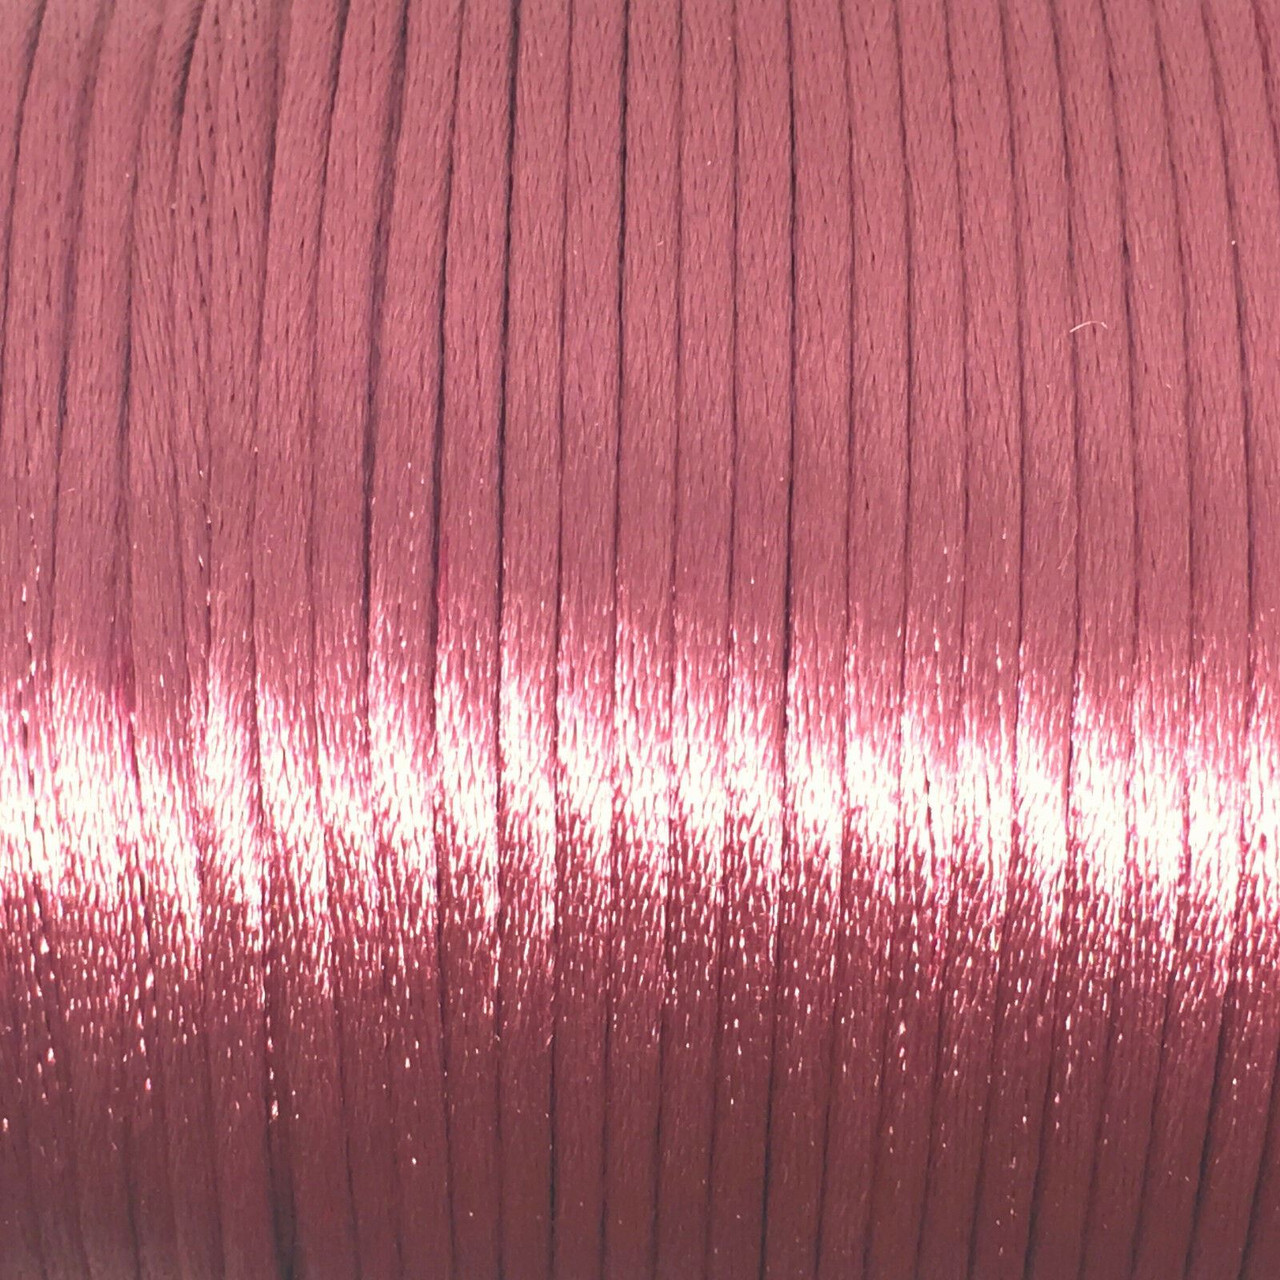 Heather (pink/purple) 2mm satin rattail cord